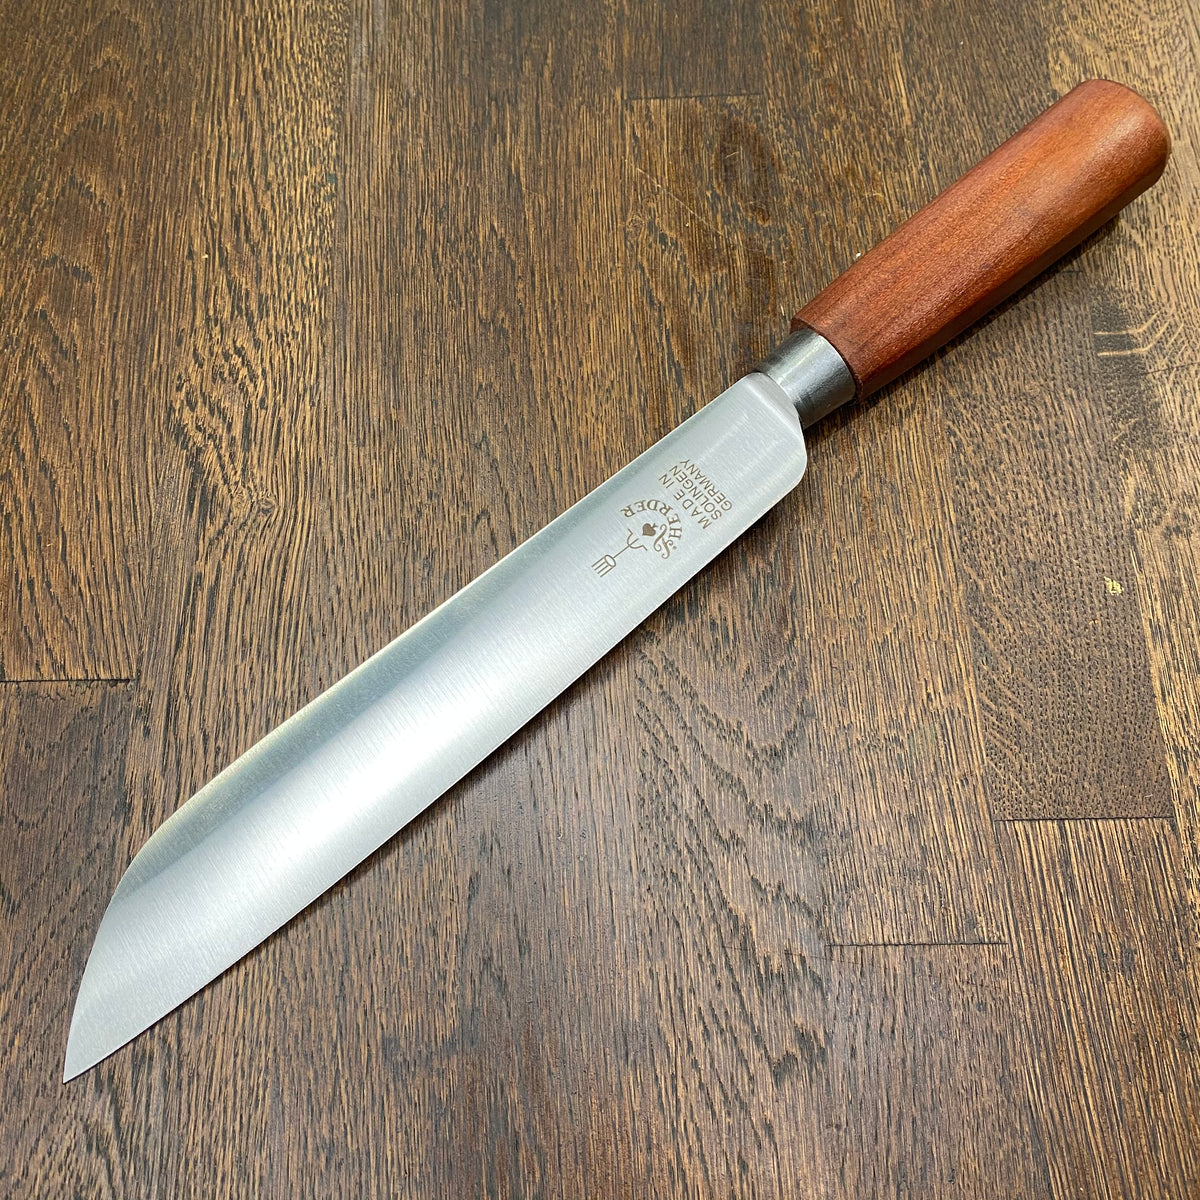 Friedr Herder 9” Old Netherlands Boscher Knife Carbon Steel Cherry